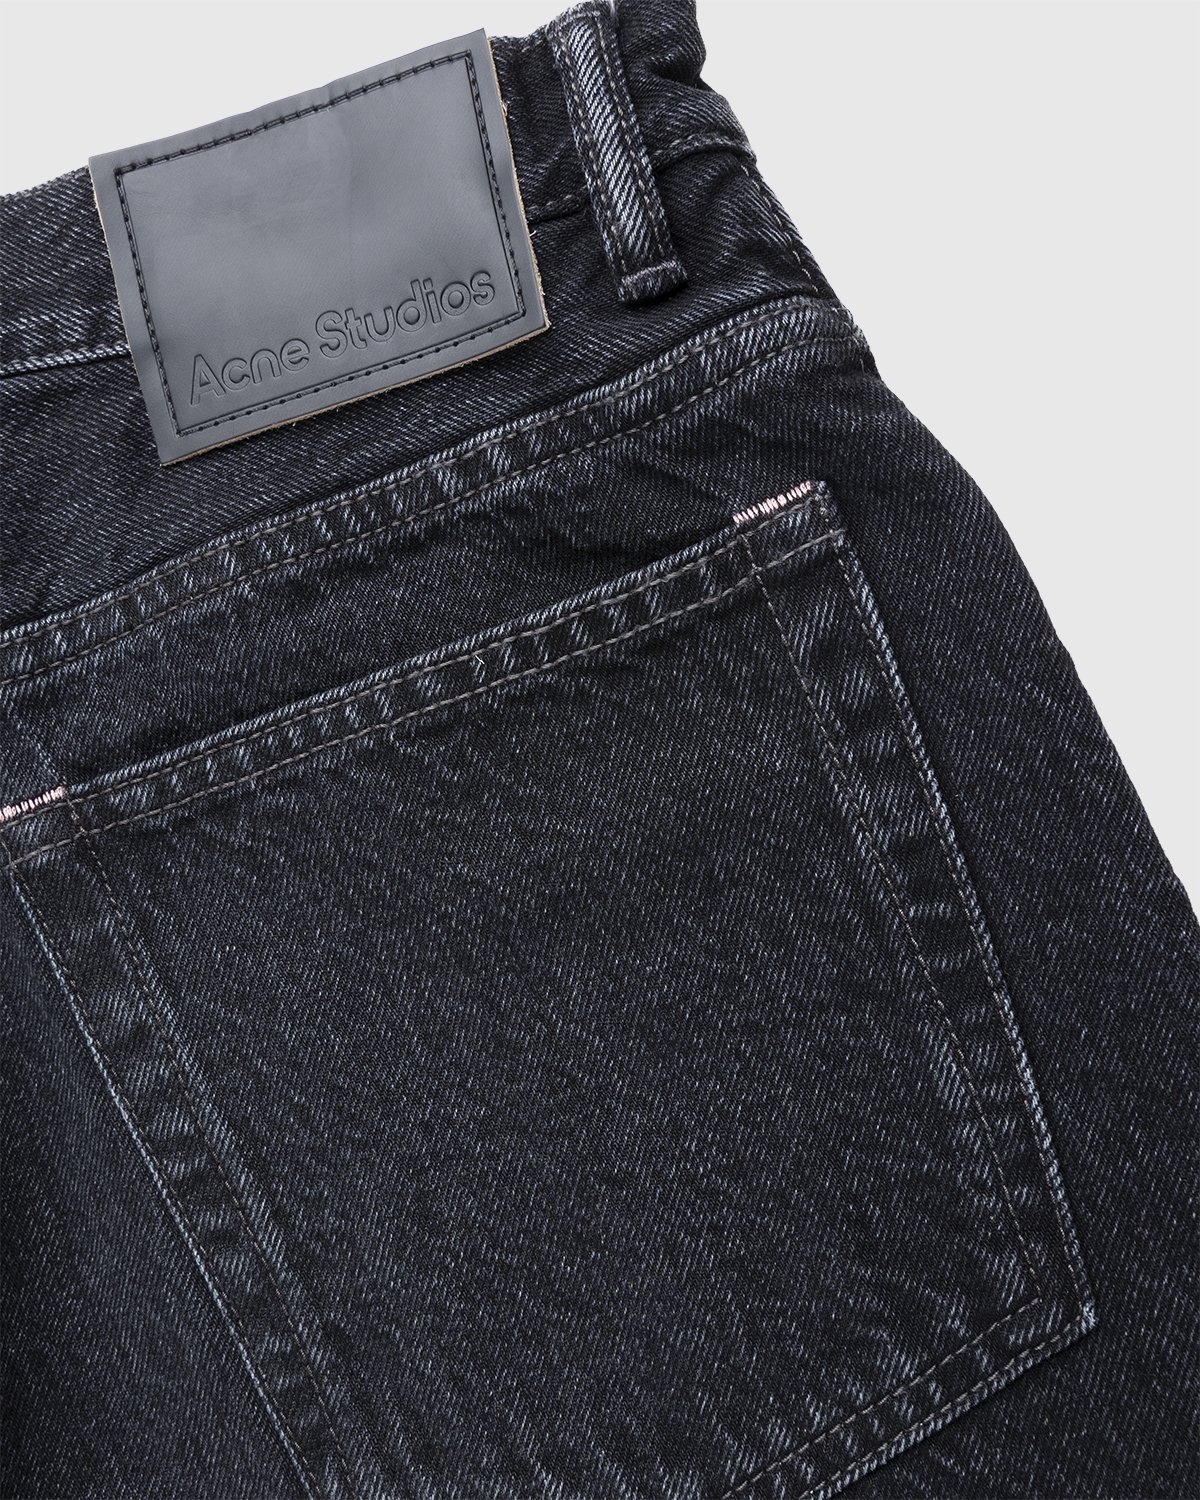 Acne Studios - Brutus 2021M Boot Cut Jeans Black - Clothing - Black - Image 3